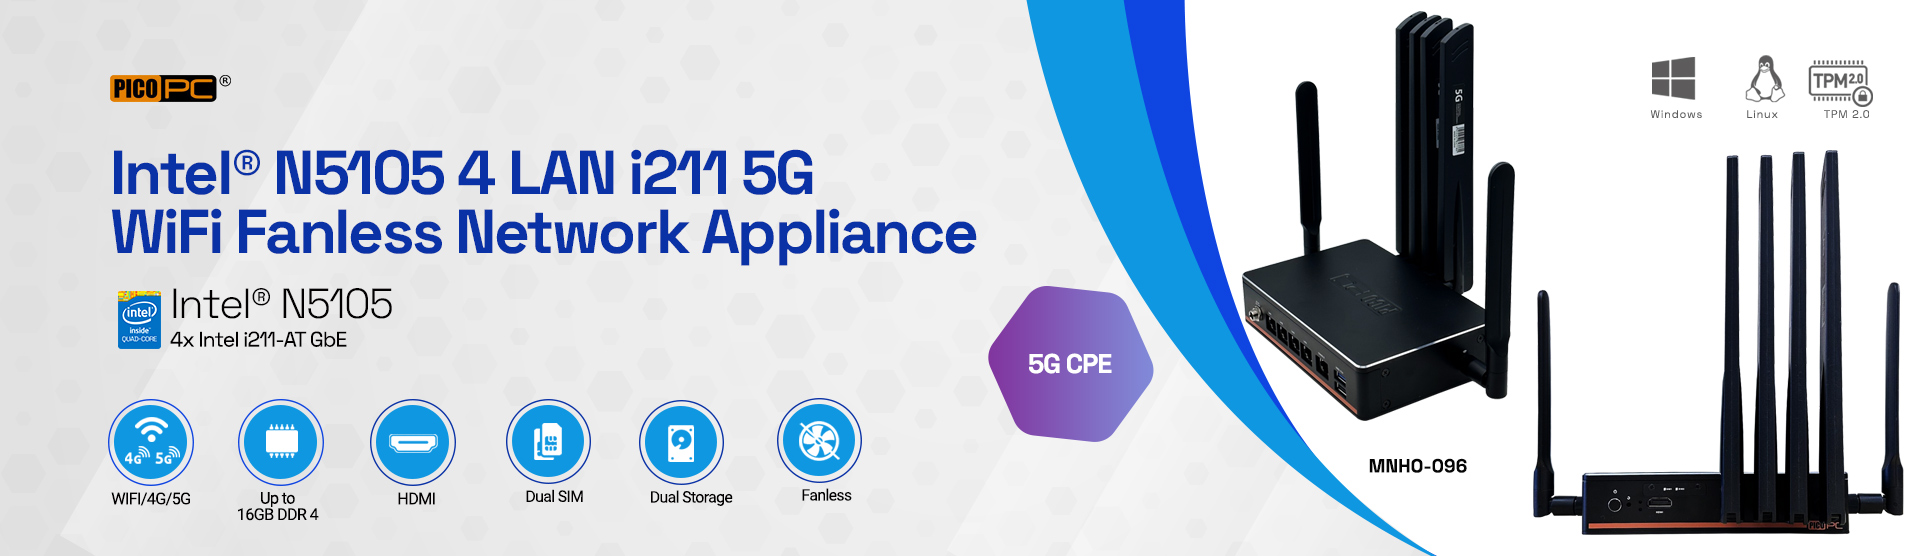 Intel® N5105 4 LAN i211 5G CPE Fanless Network Appliance SD-WAN Security Gateway with TPM
